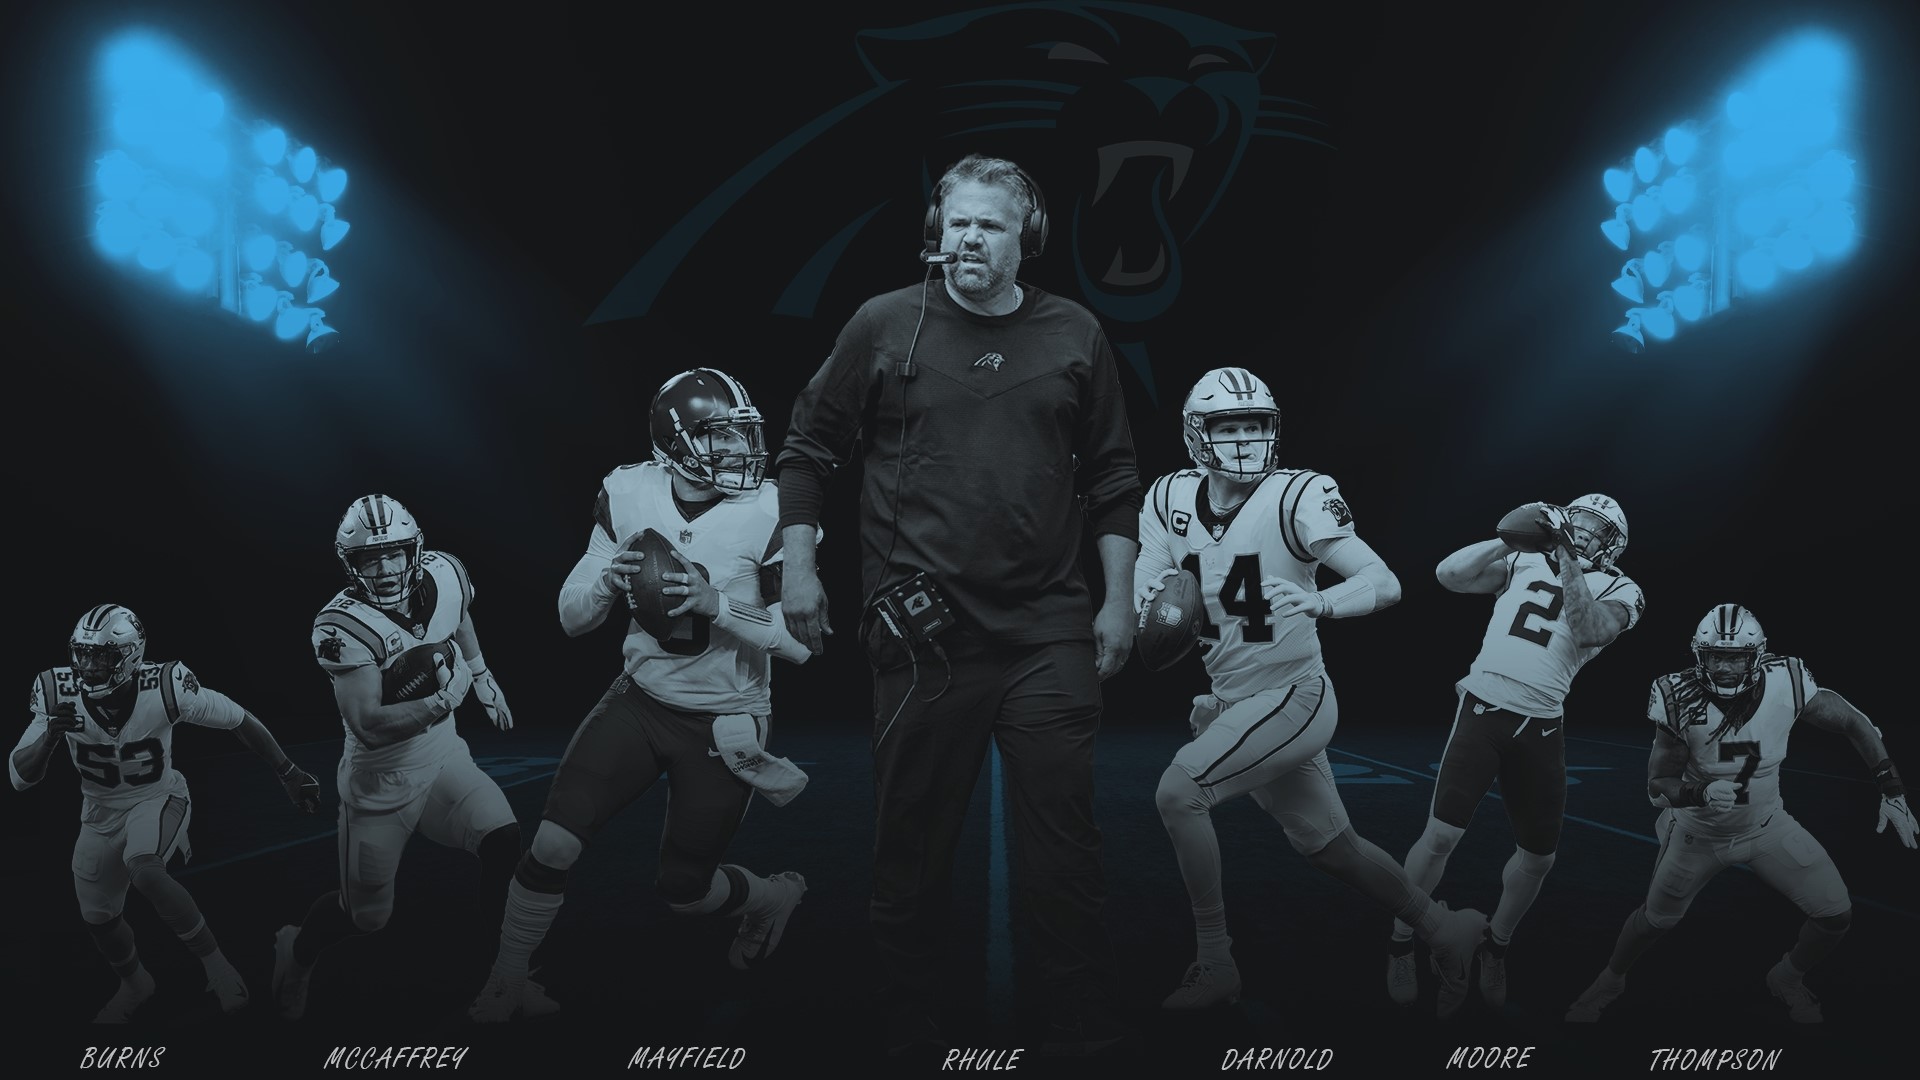 2022 Carolina Panthers season predictions, players to watch